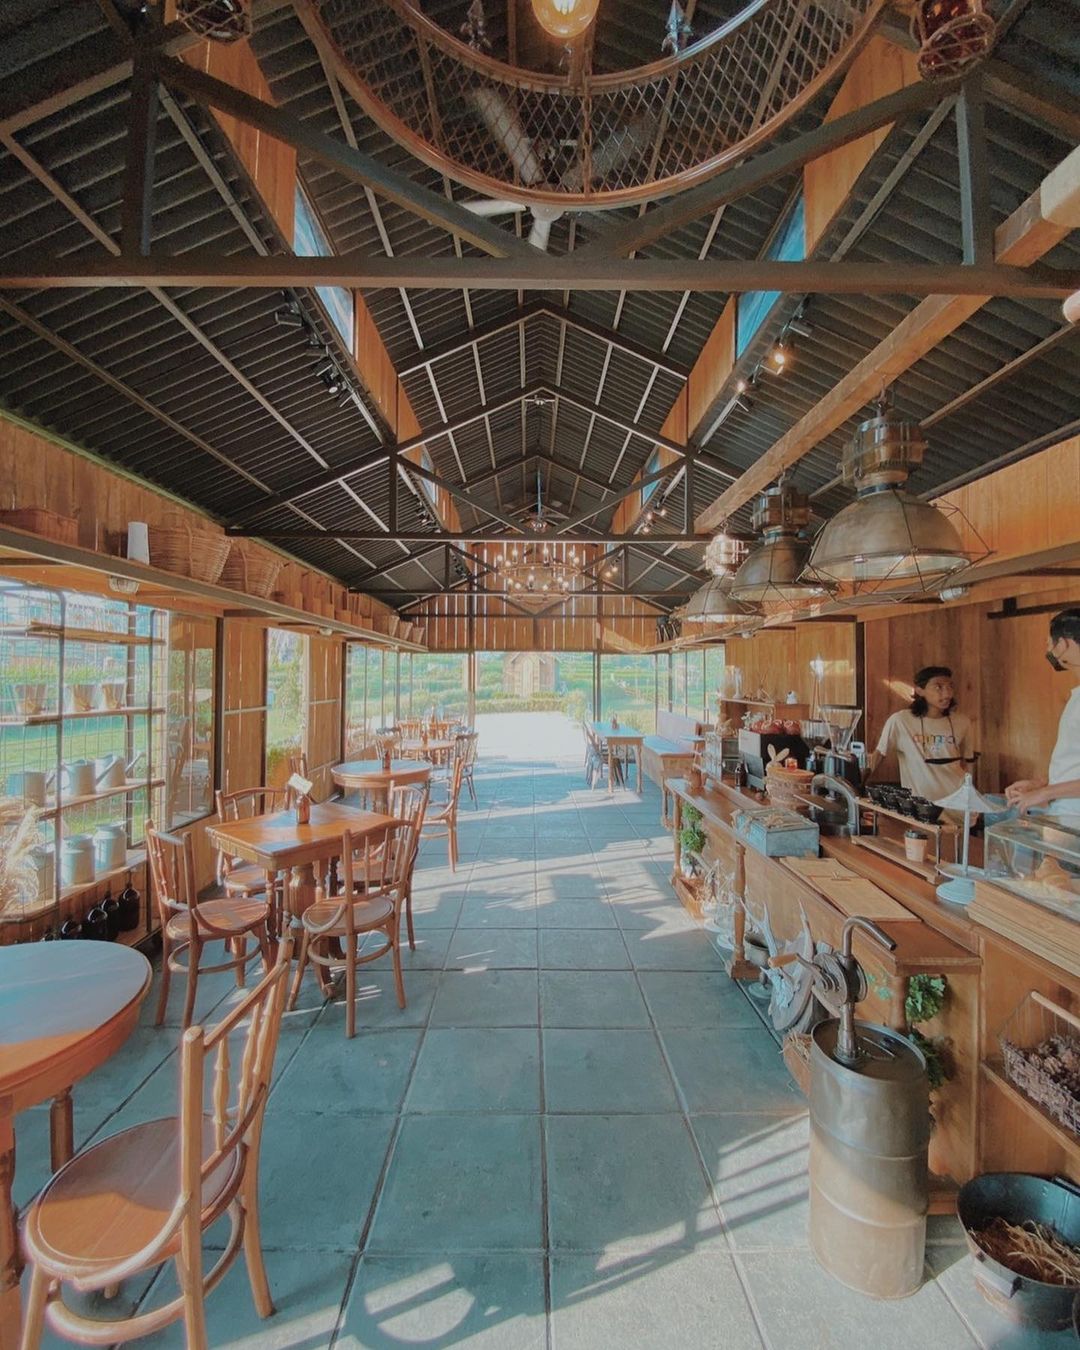 Tempat Indoor Rustic Market Mojokerto Image From @niceplace Sub_